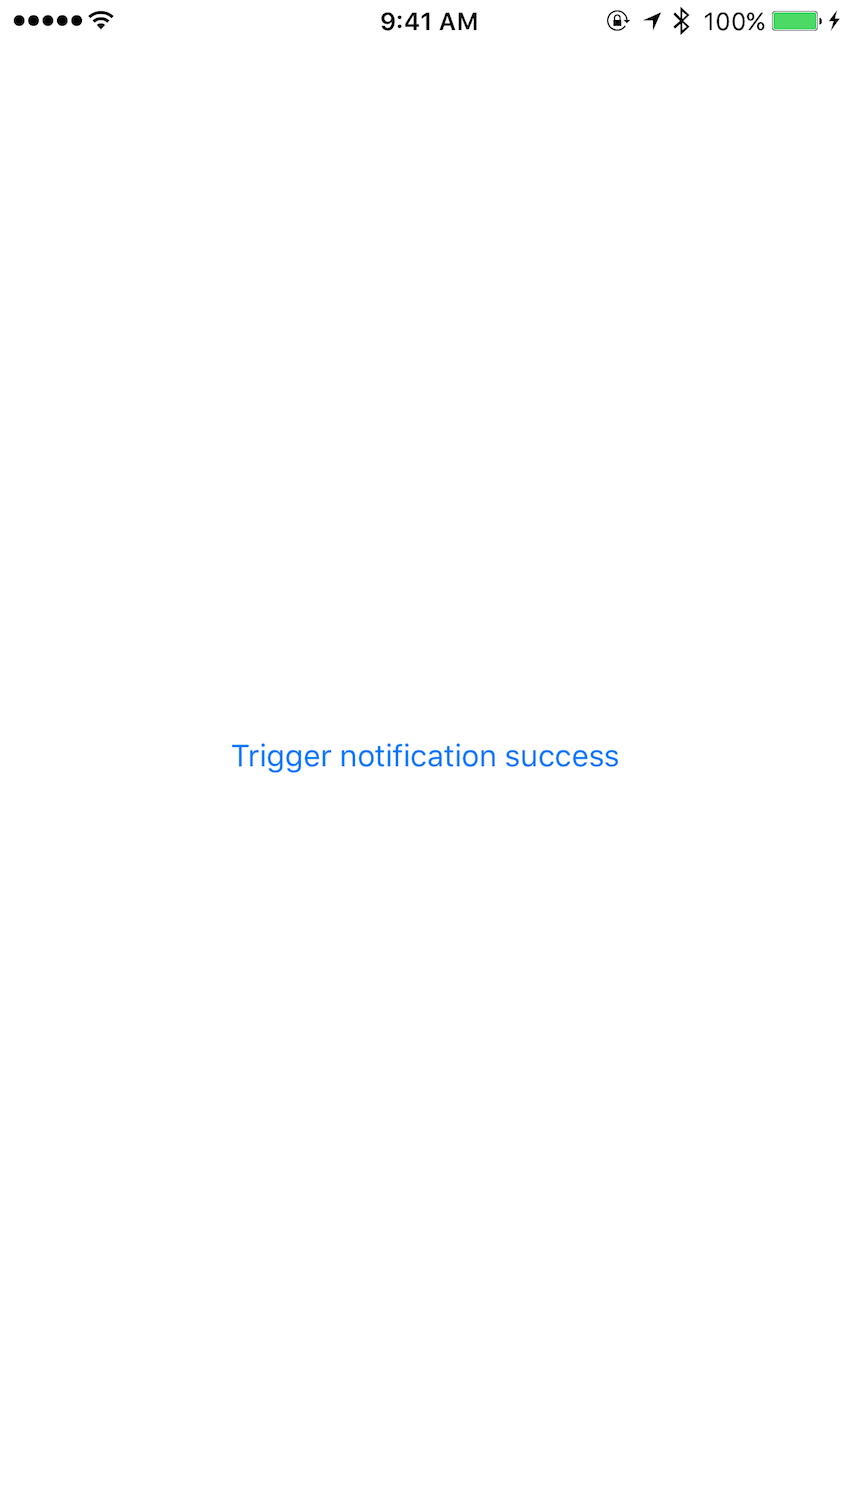 Trigger notification success message